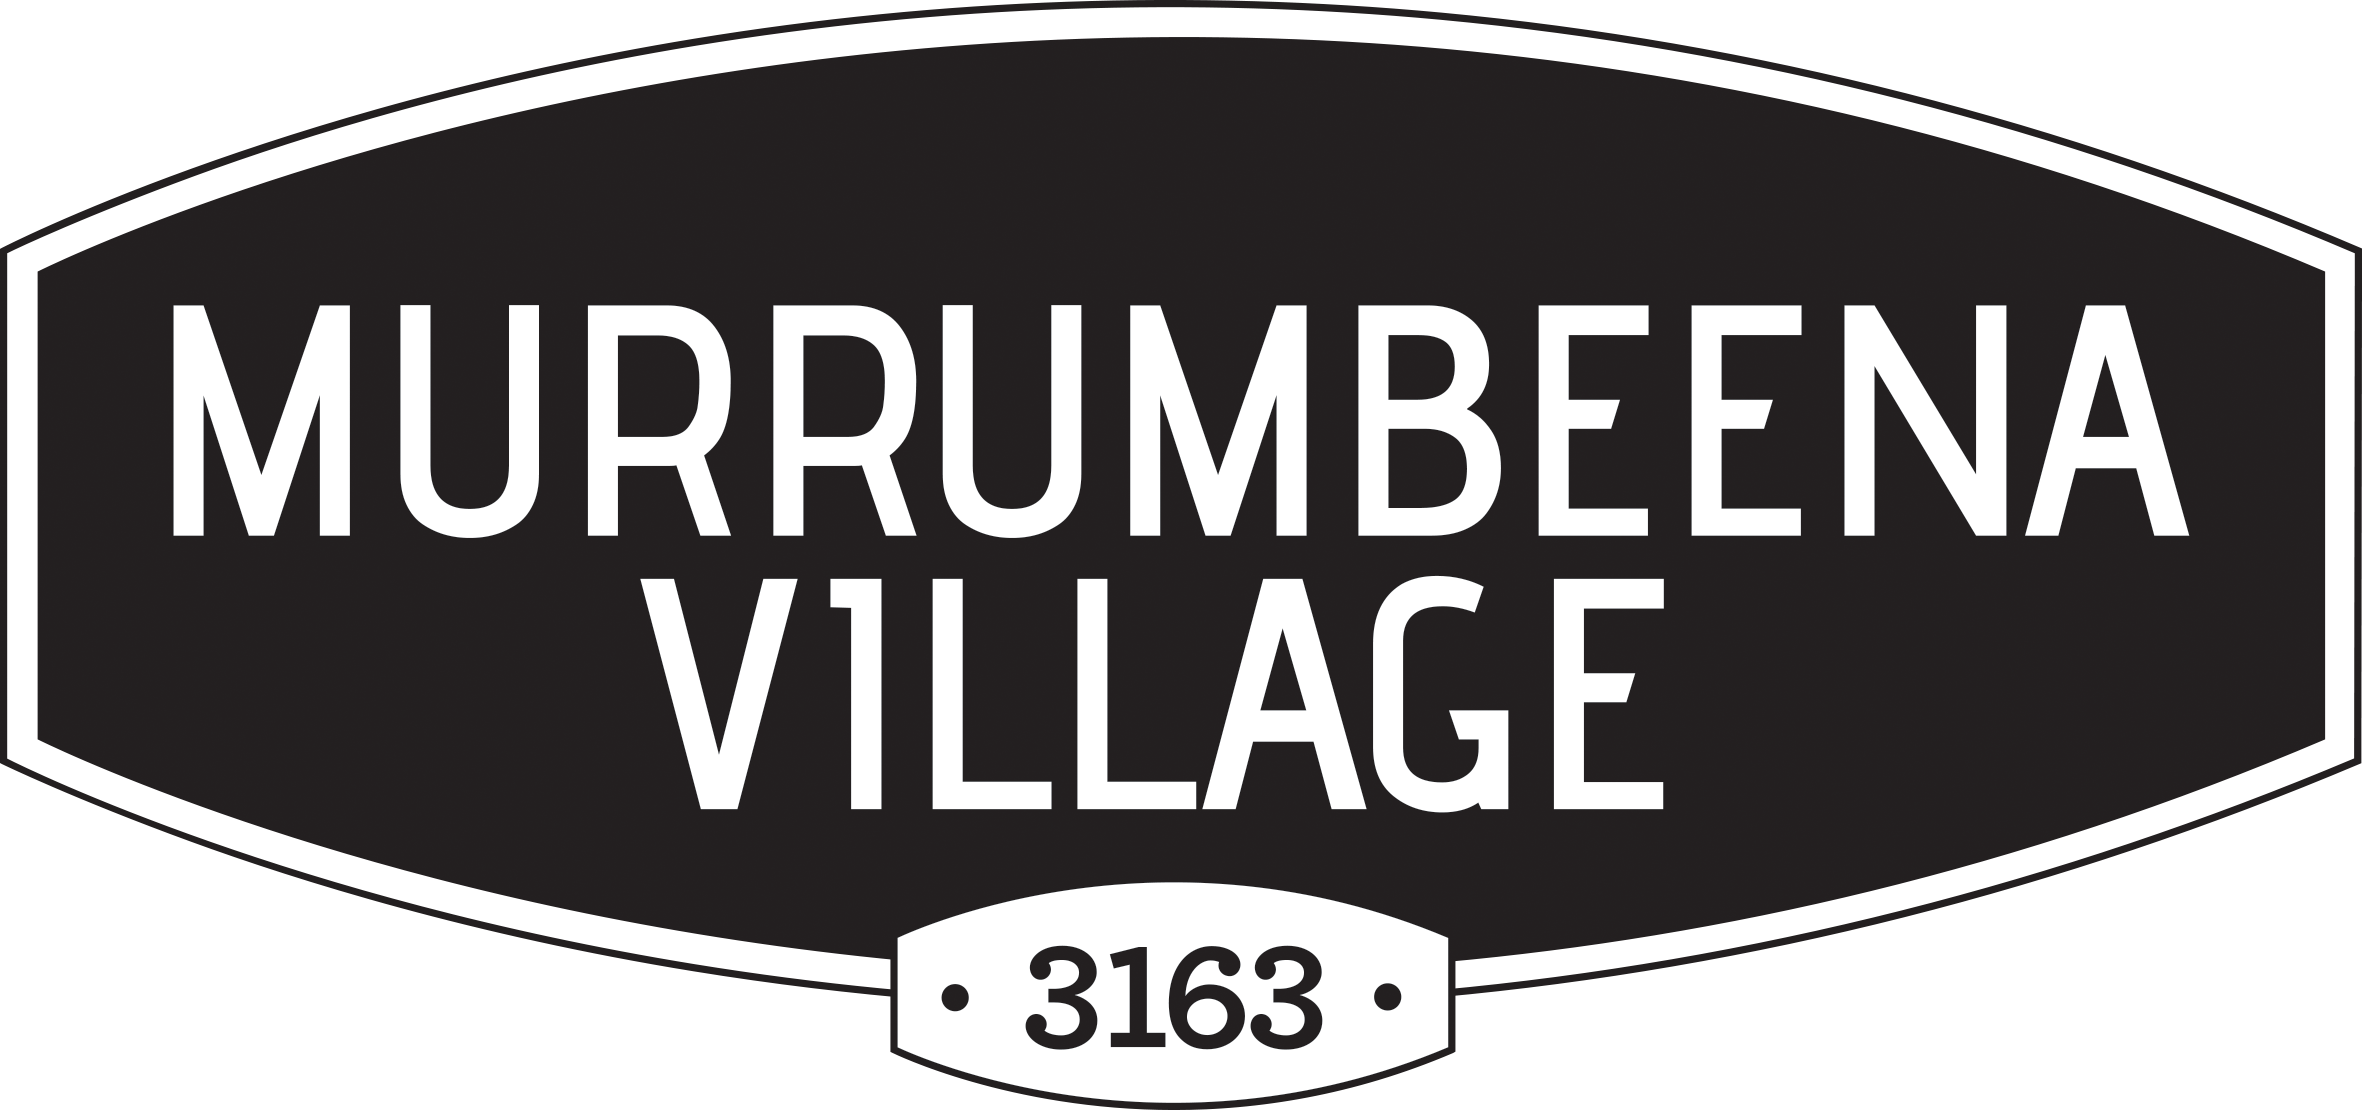 Murrumbeena Village • 3163 •